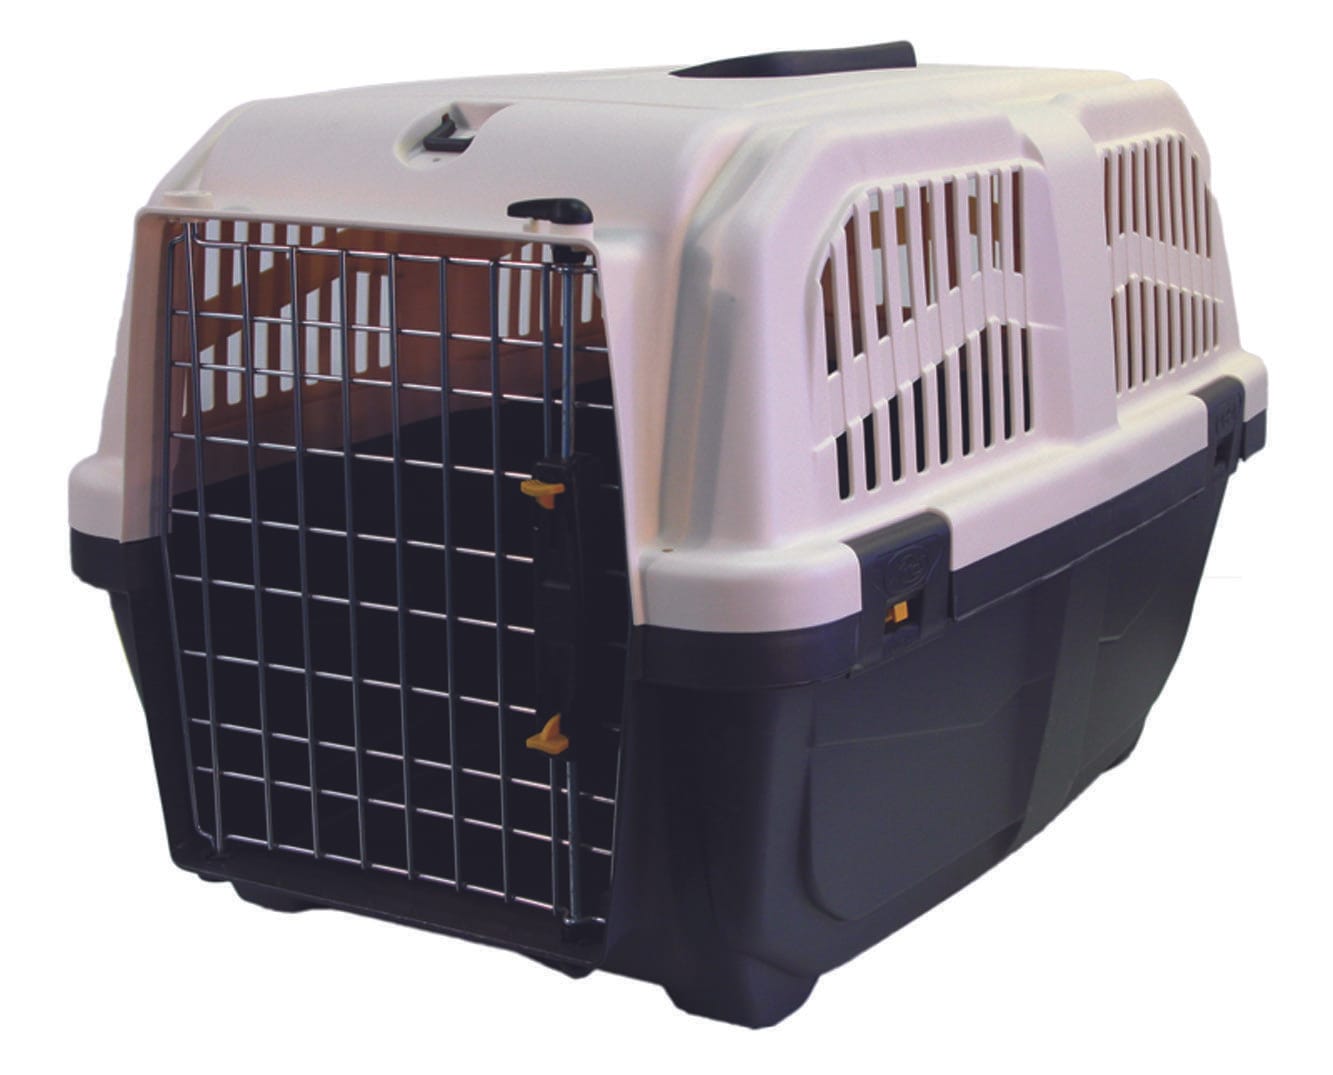 Cage de transport pour chat Scudo3 IATA 60x40x39cm - VADIGRAN